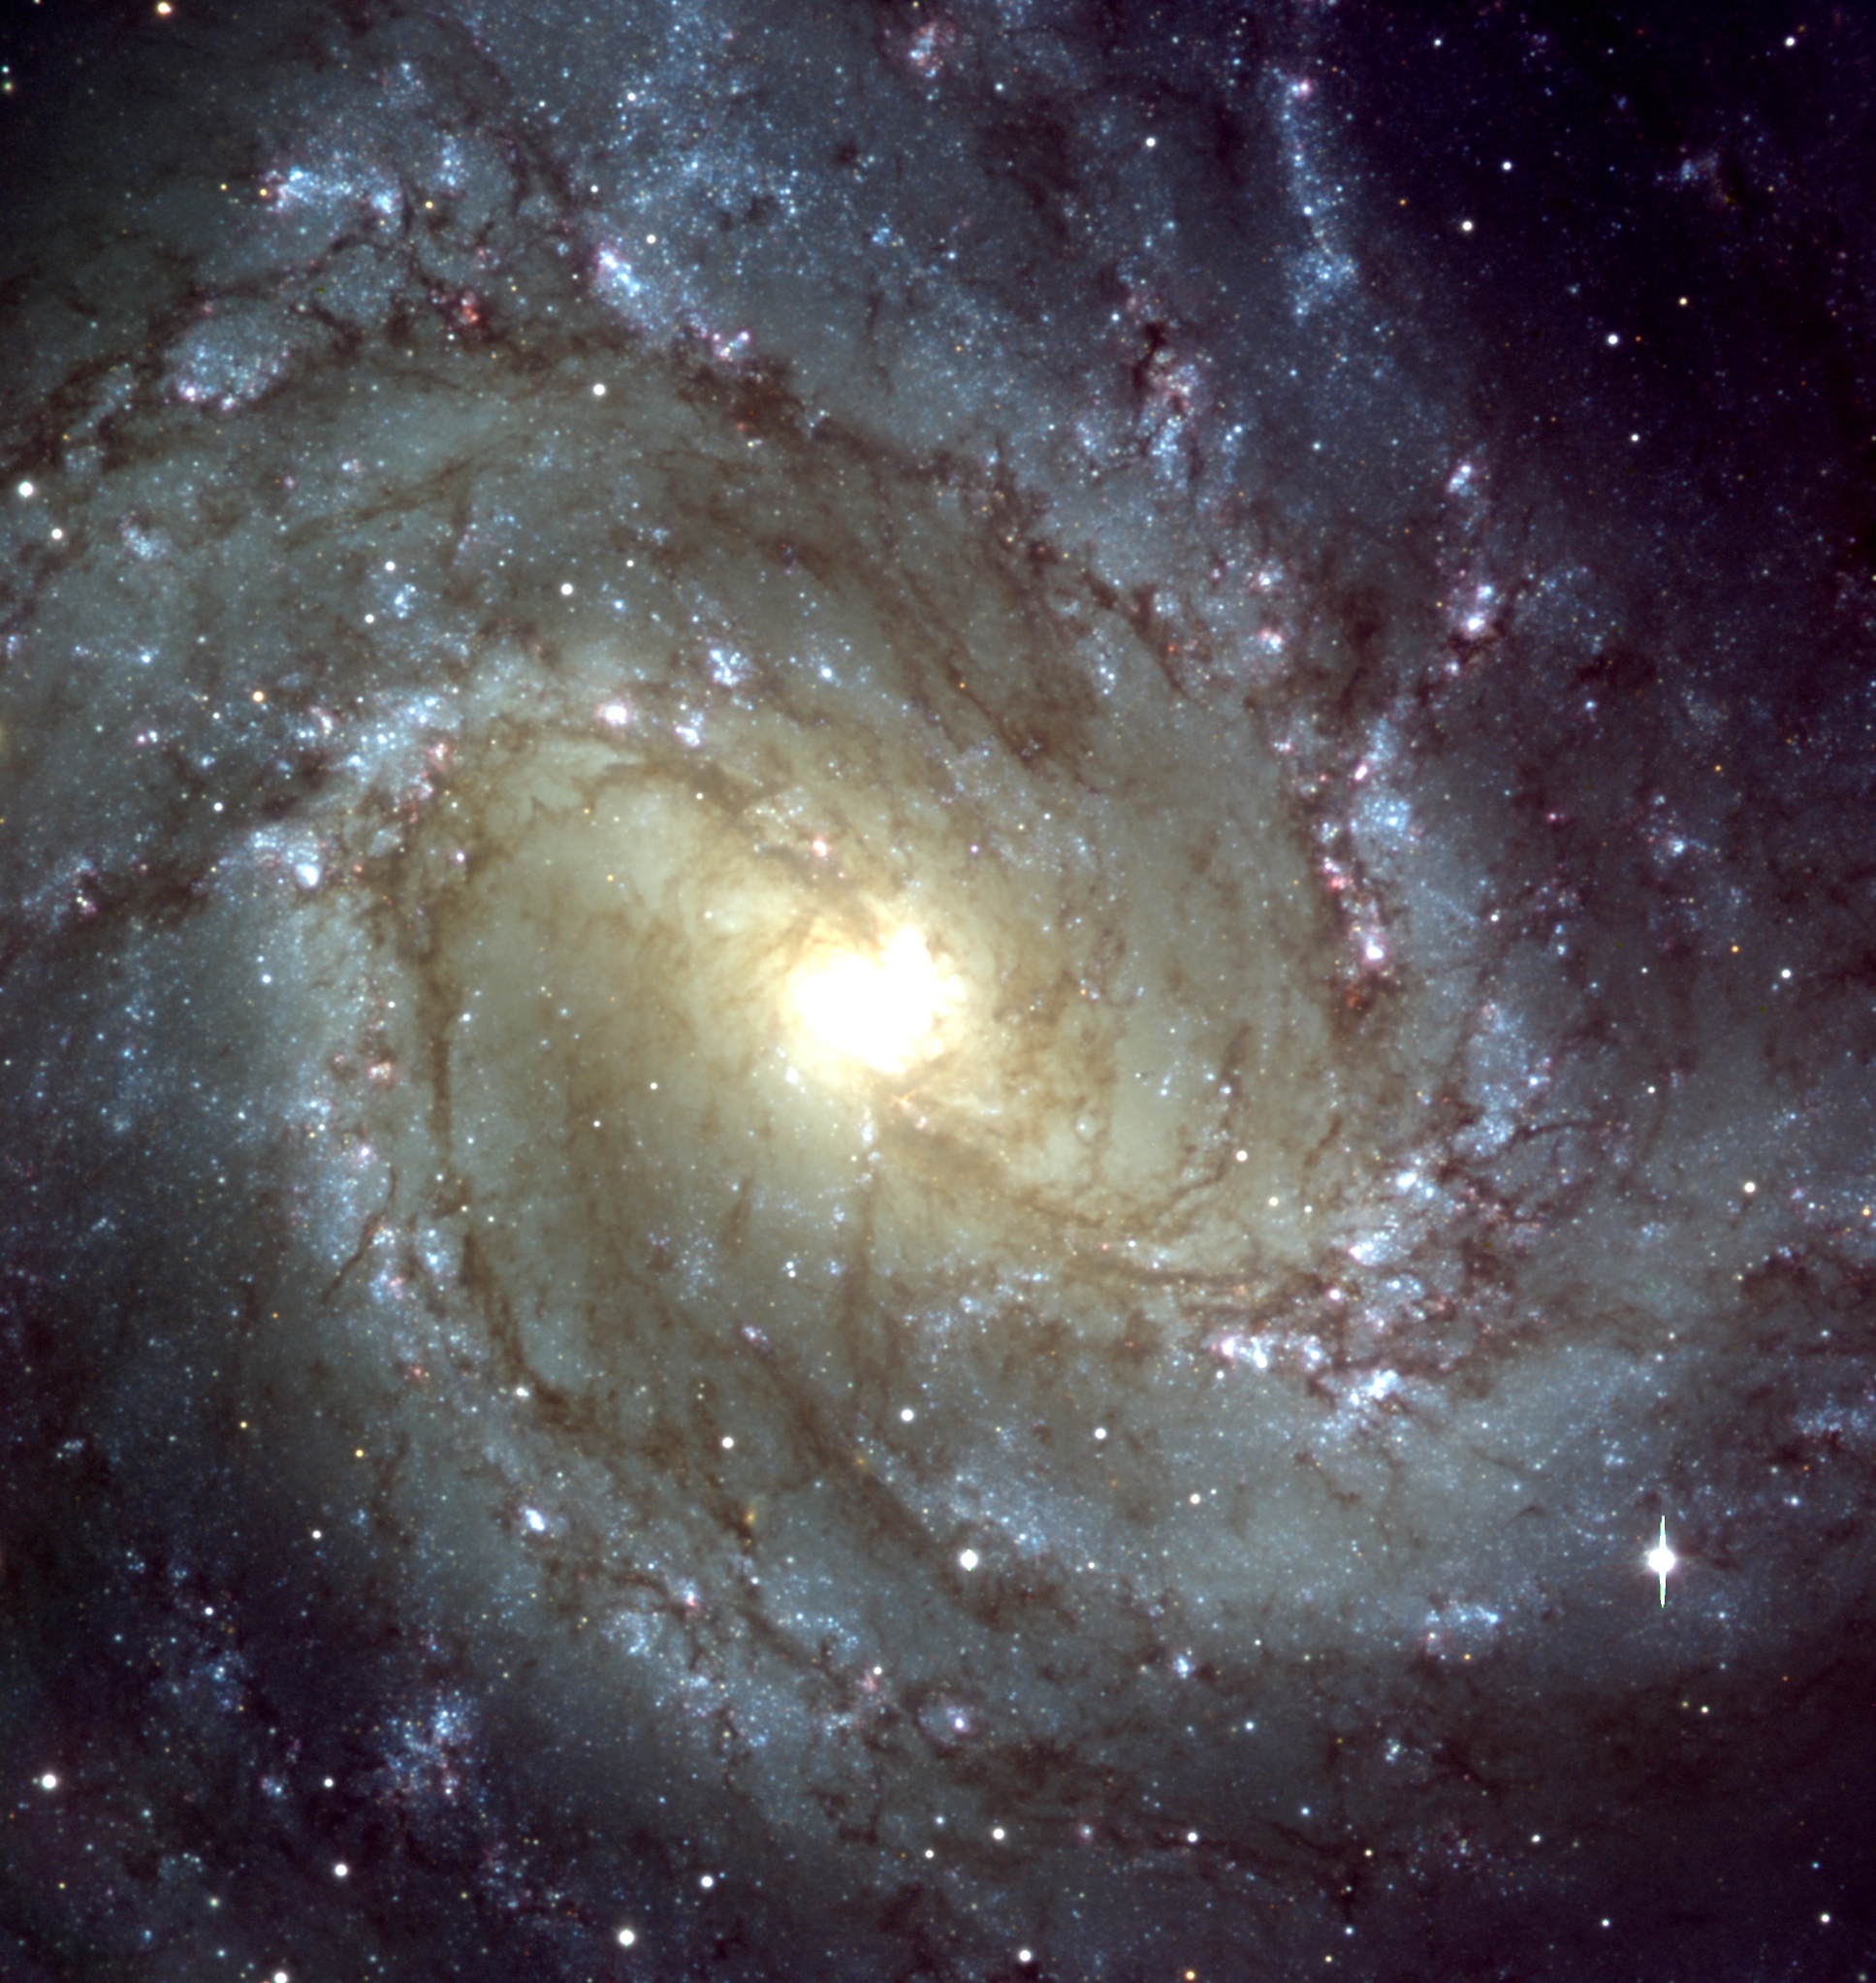 https://thethoughtstash.files.wordpress.com/2012/11/eso-southern-pinwheel-galaxy-m83jpg